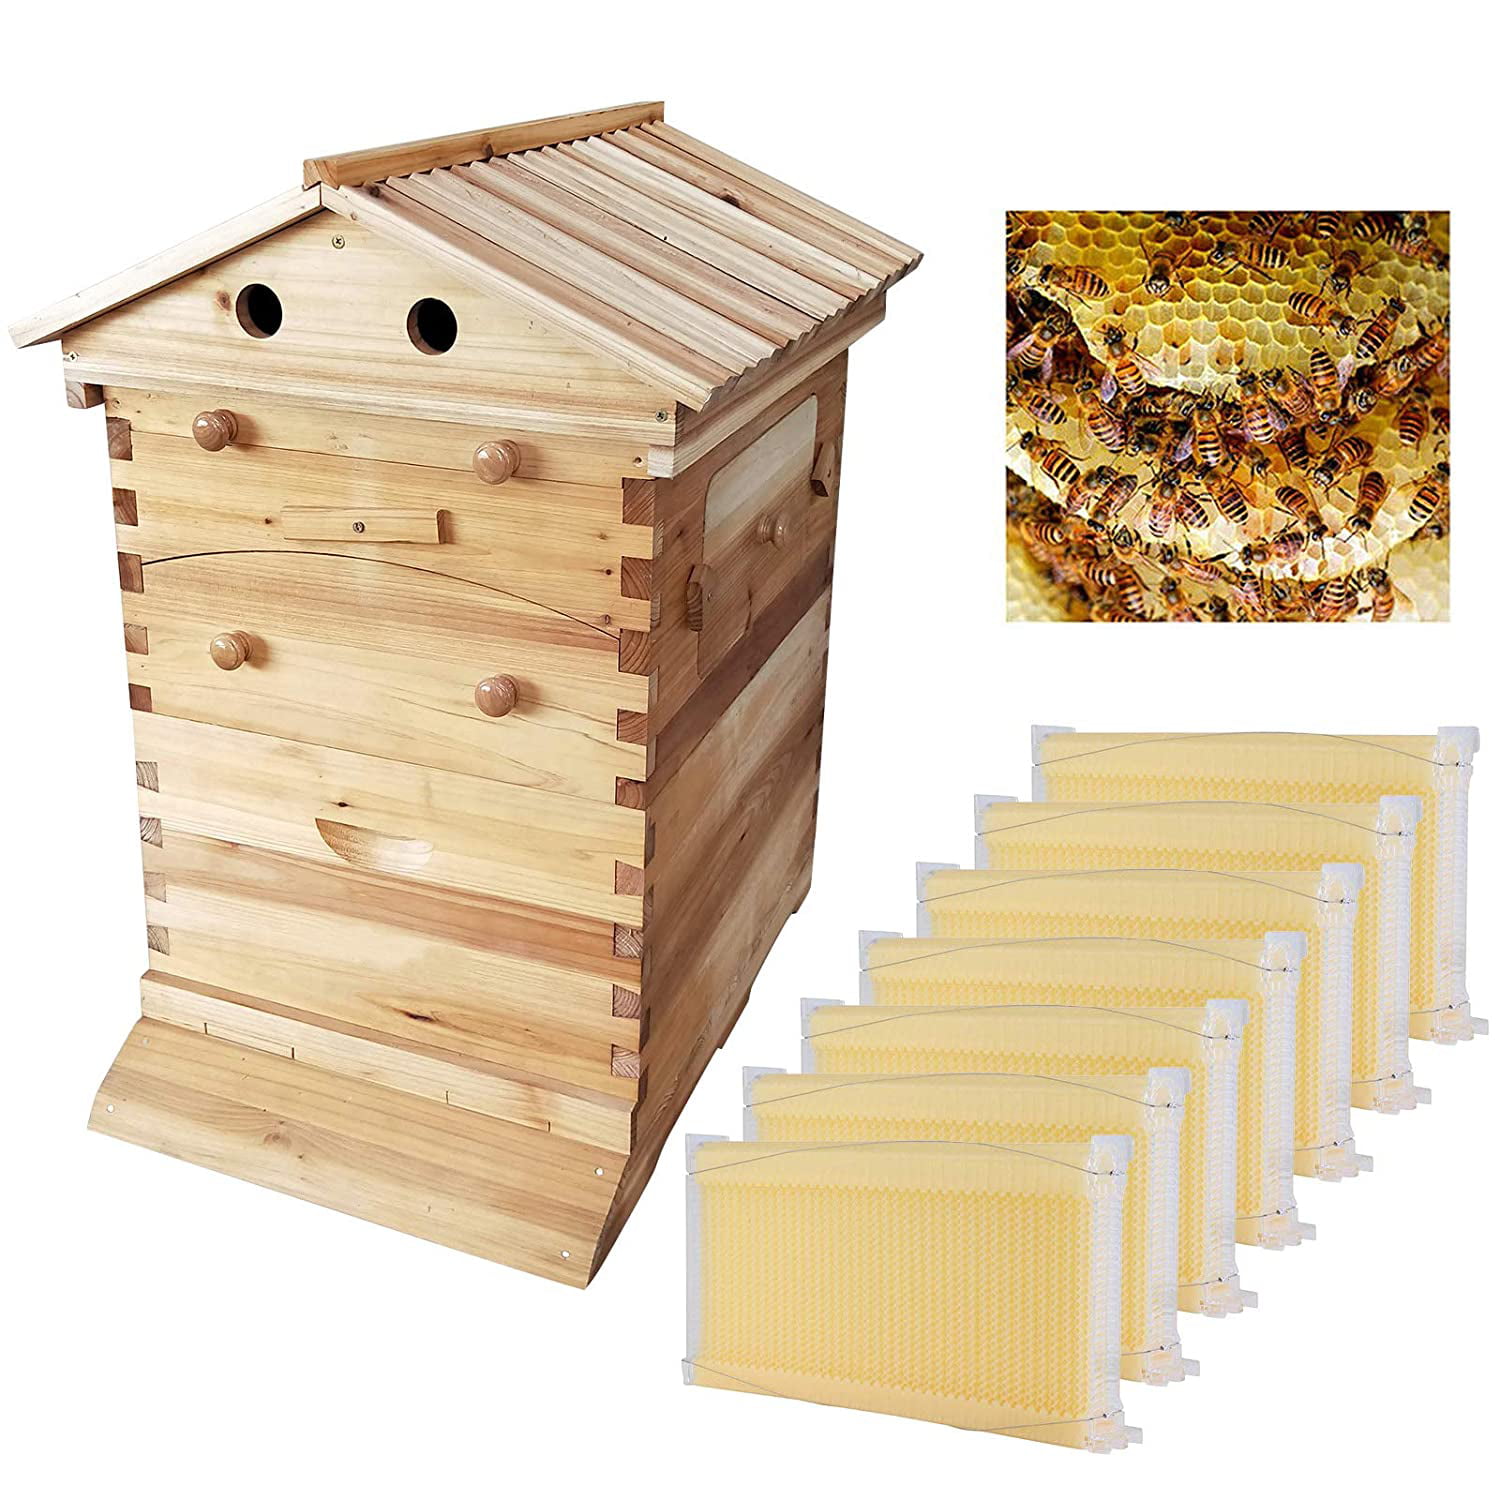 7 Pcs/set Clear Comb Beehive Auto-Flowing Honey Frames Beekeeping Harvesting US 